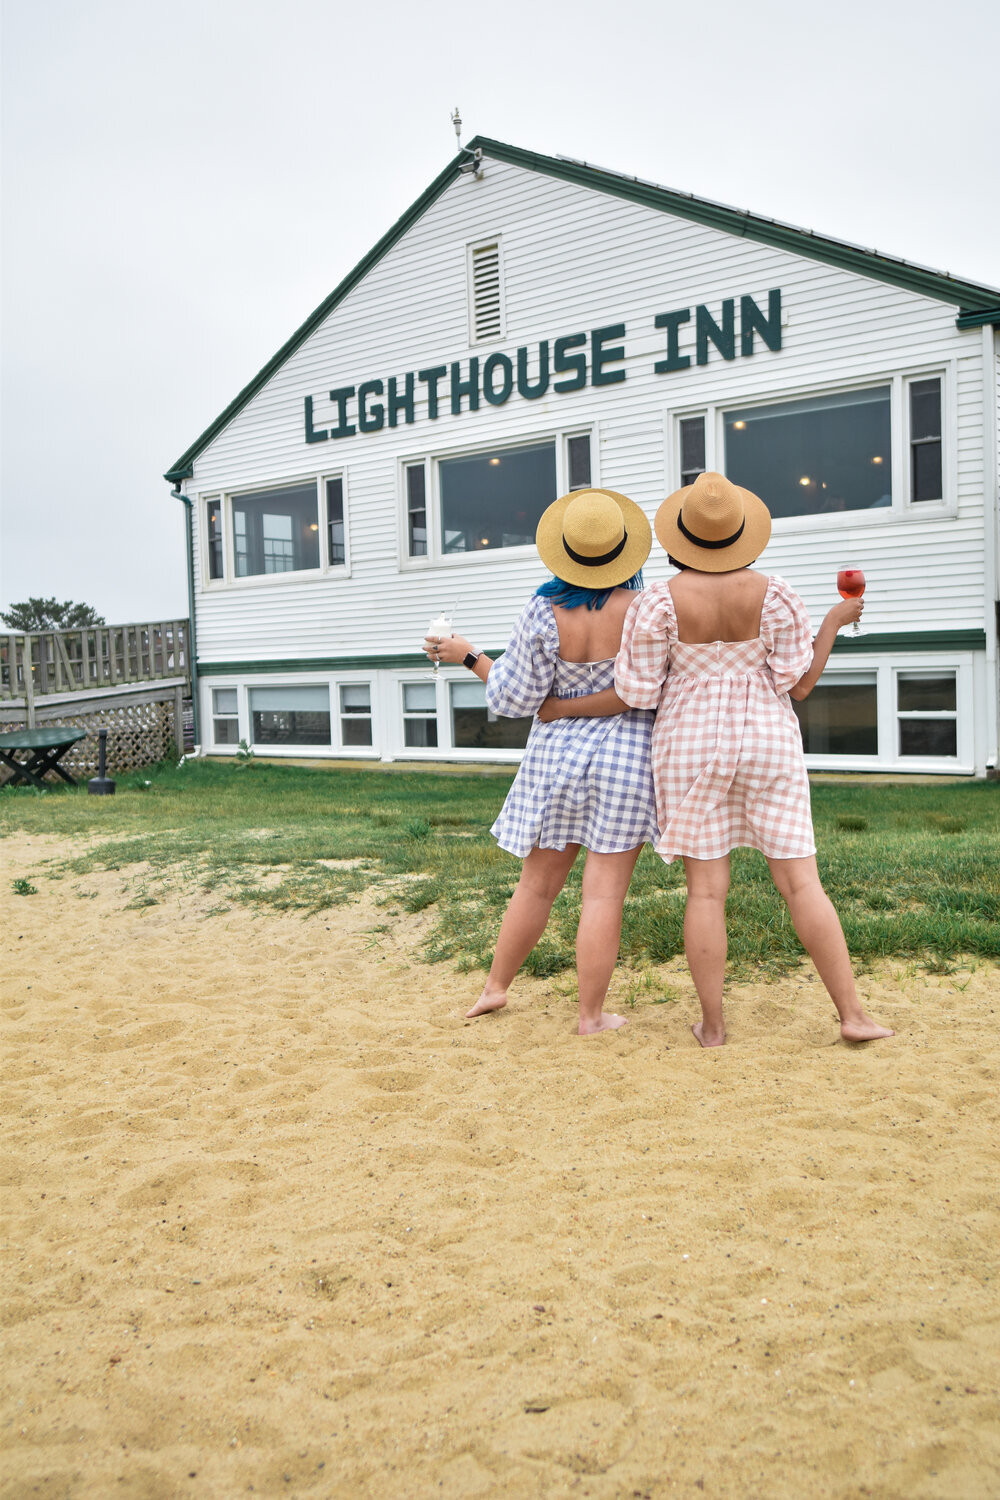 Cape Cod Lighthouse Inn Review